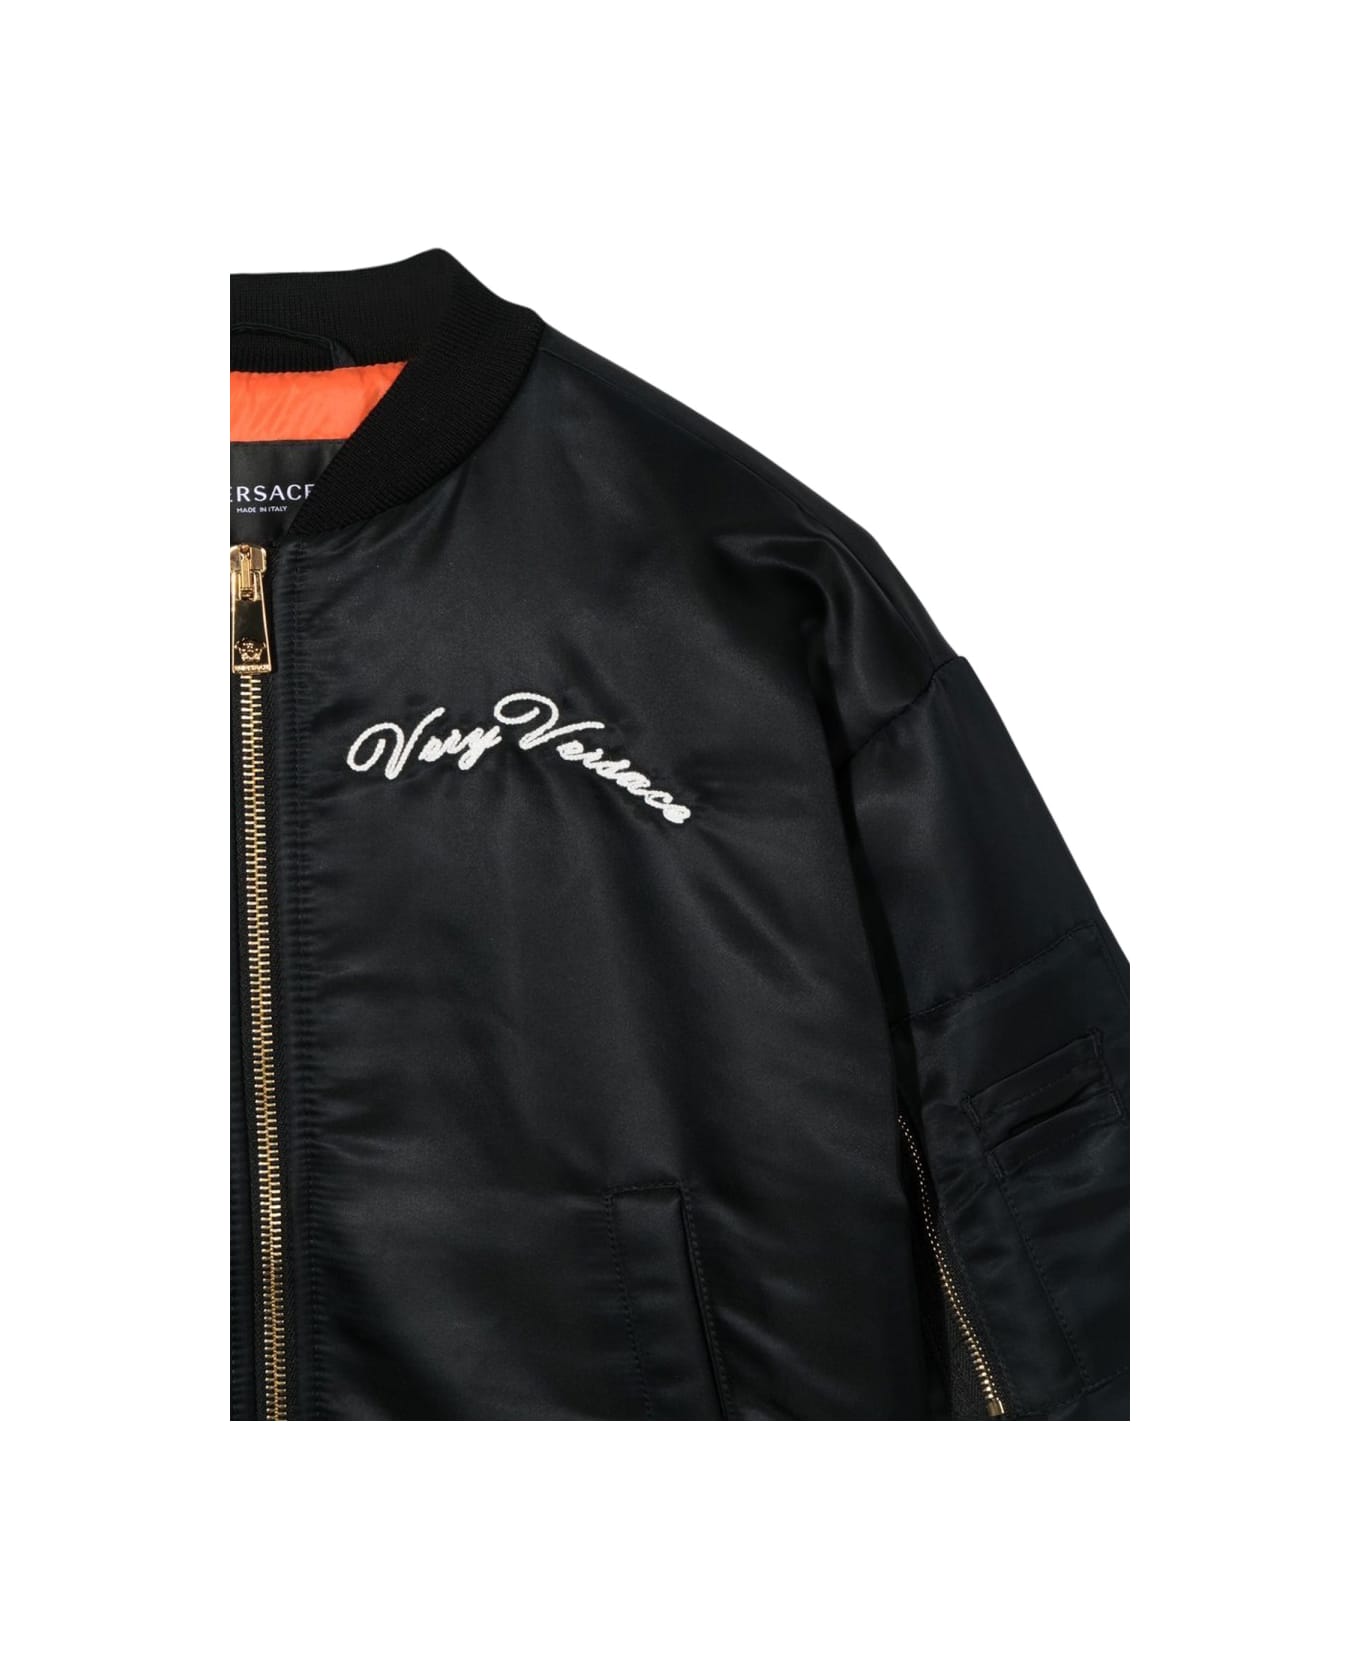 Versace Donatella Embroidery Bomber Jacket - BLACK コート＆ジャケット